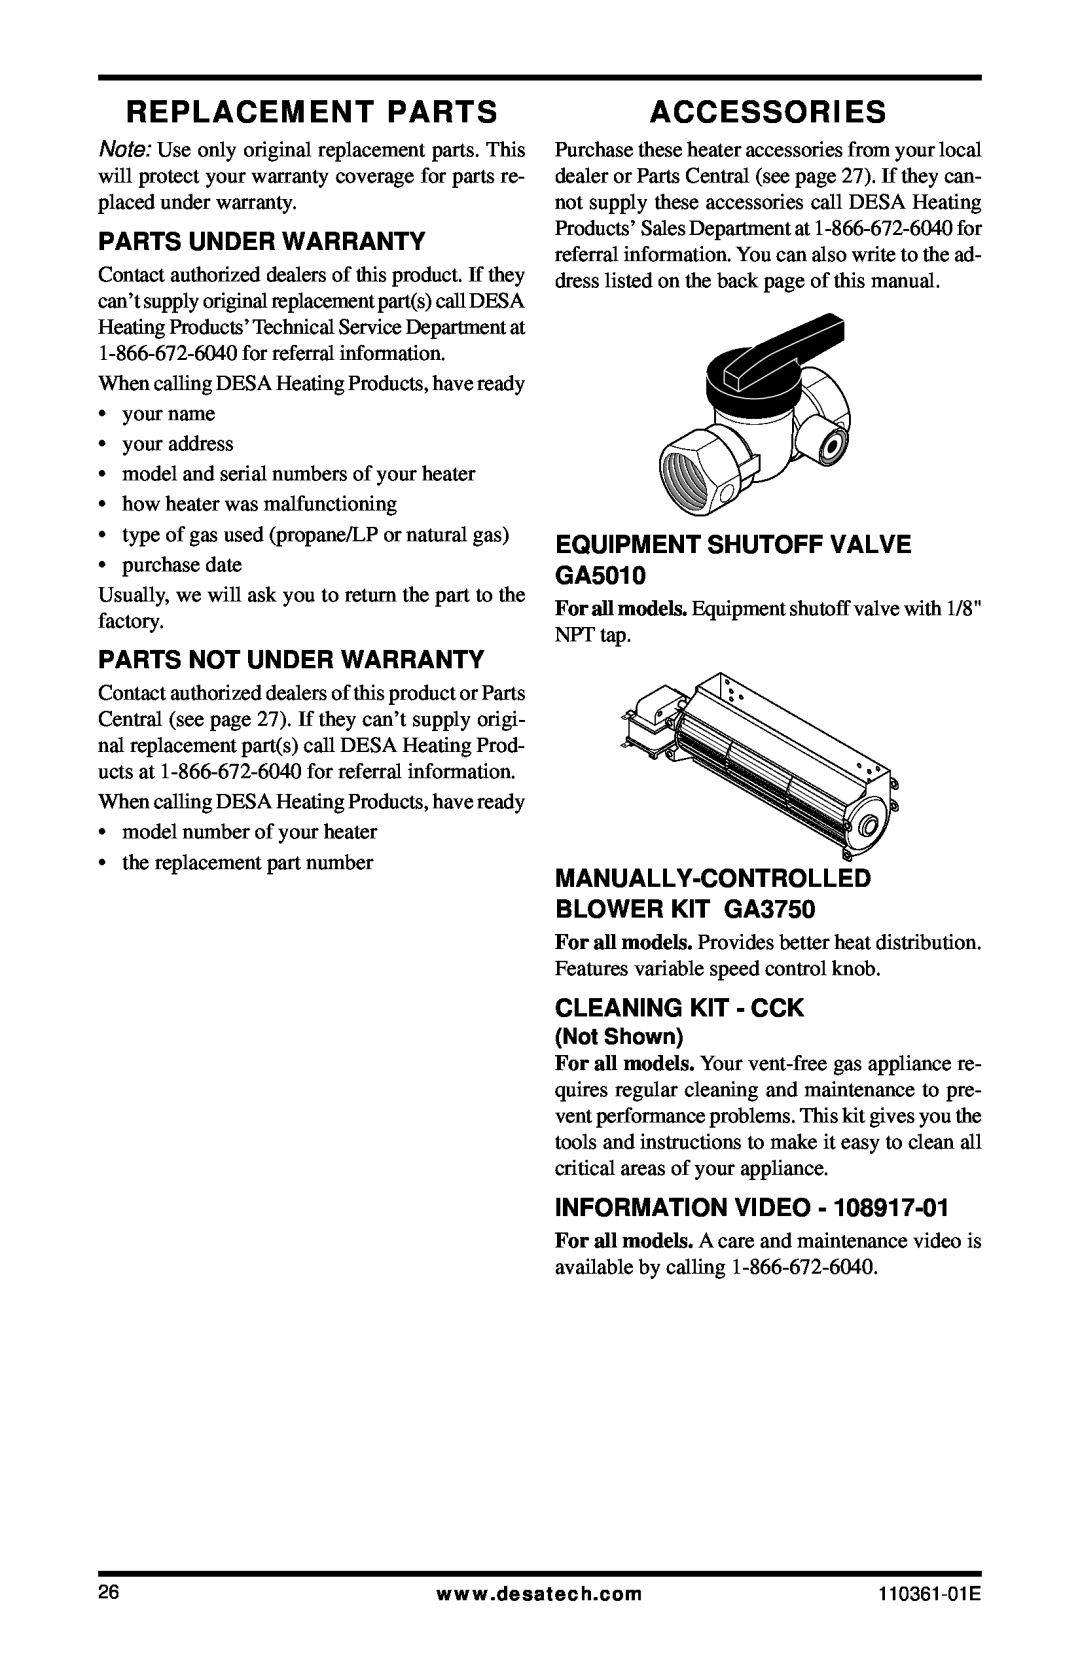 Desa Tech S26NTA Parts Under Warranty, Parts Not Under Warranty, EQUIPMENT SHUTOFF VALVE GA5010, Cleaning Kit - Cck 